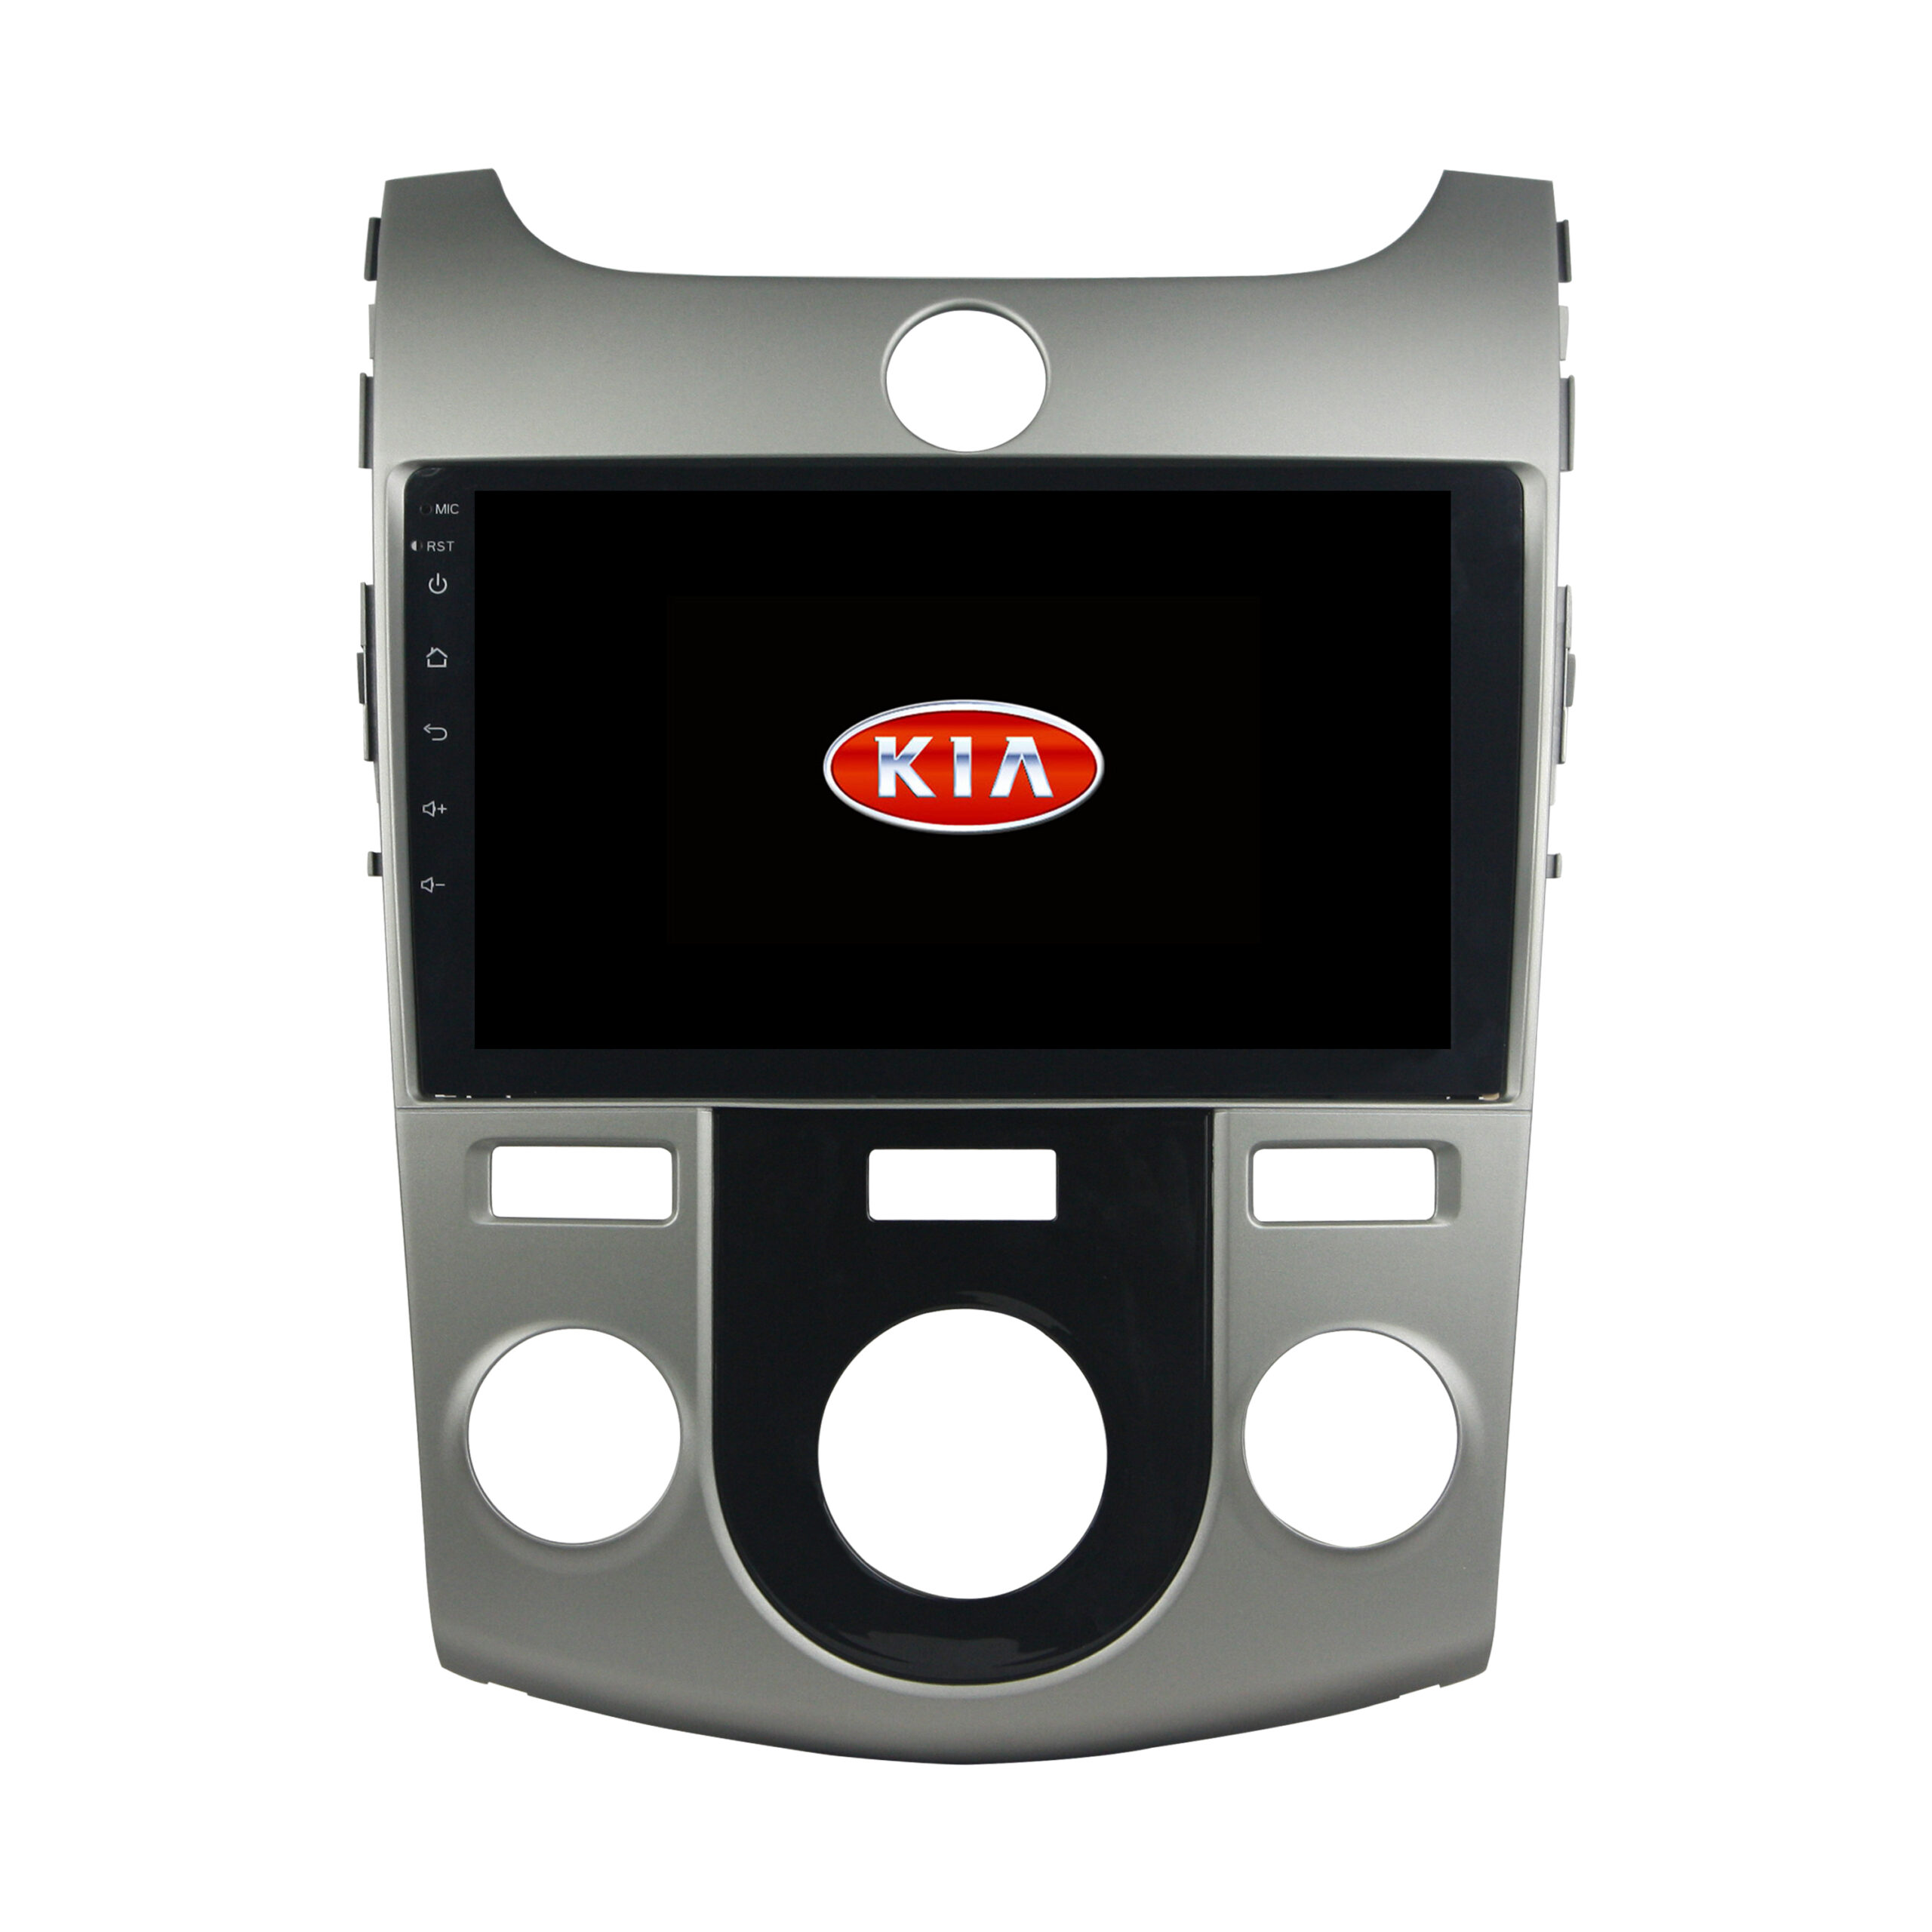 KD-9703 Car Navigation Player car stereo for KIA Cerato/Forte